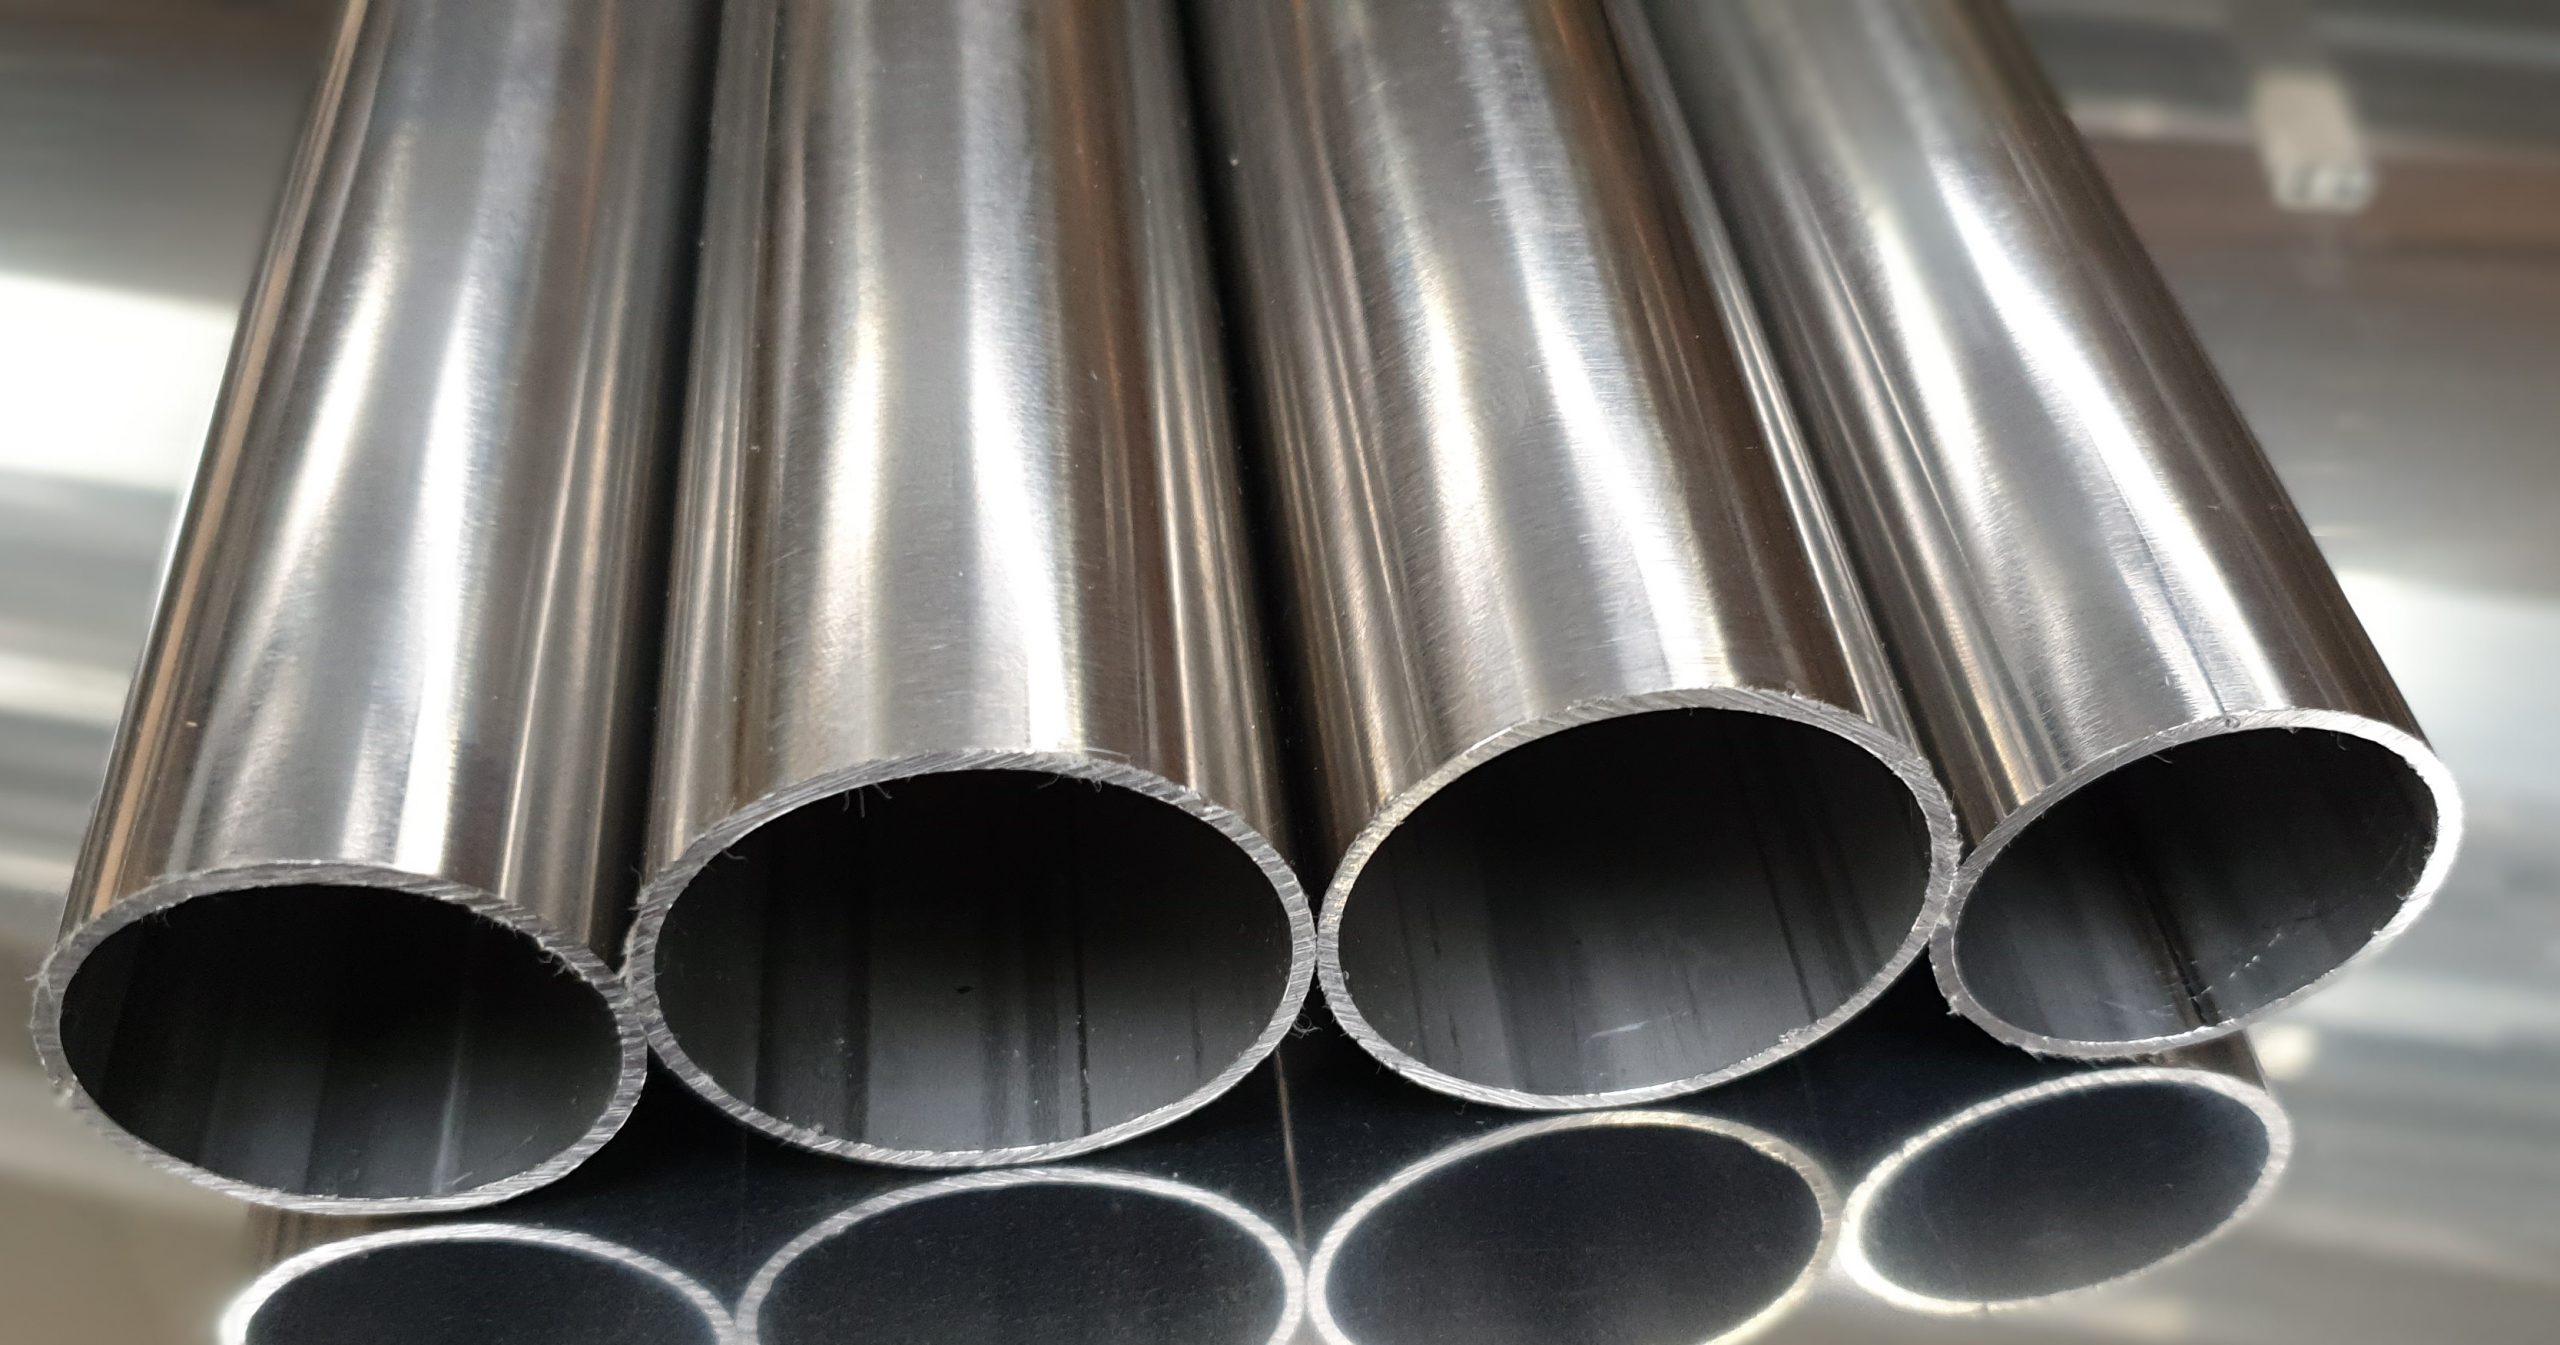 Metal tubes. Stainless Polish Steel. Труба нерж. Ф101, 6*4*6000. Трубы из нержавеющей стали. Труба нержавейка.